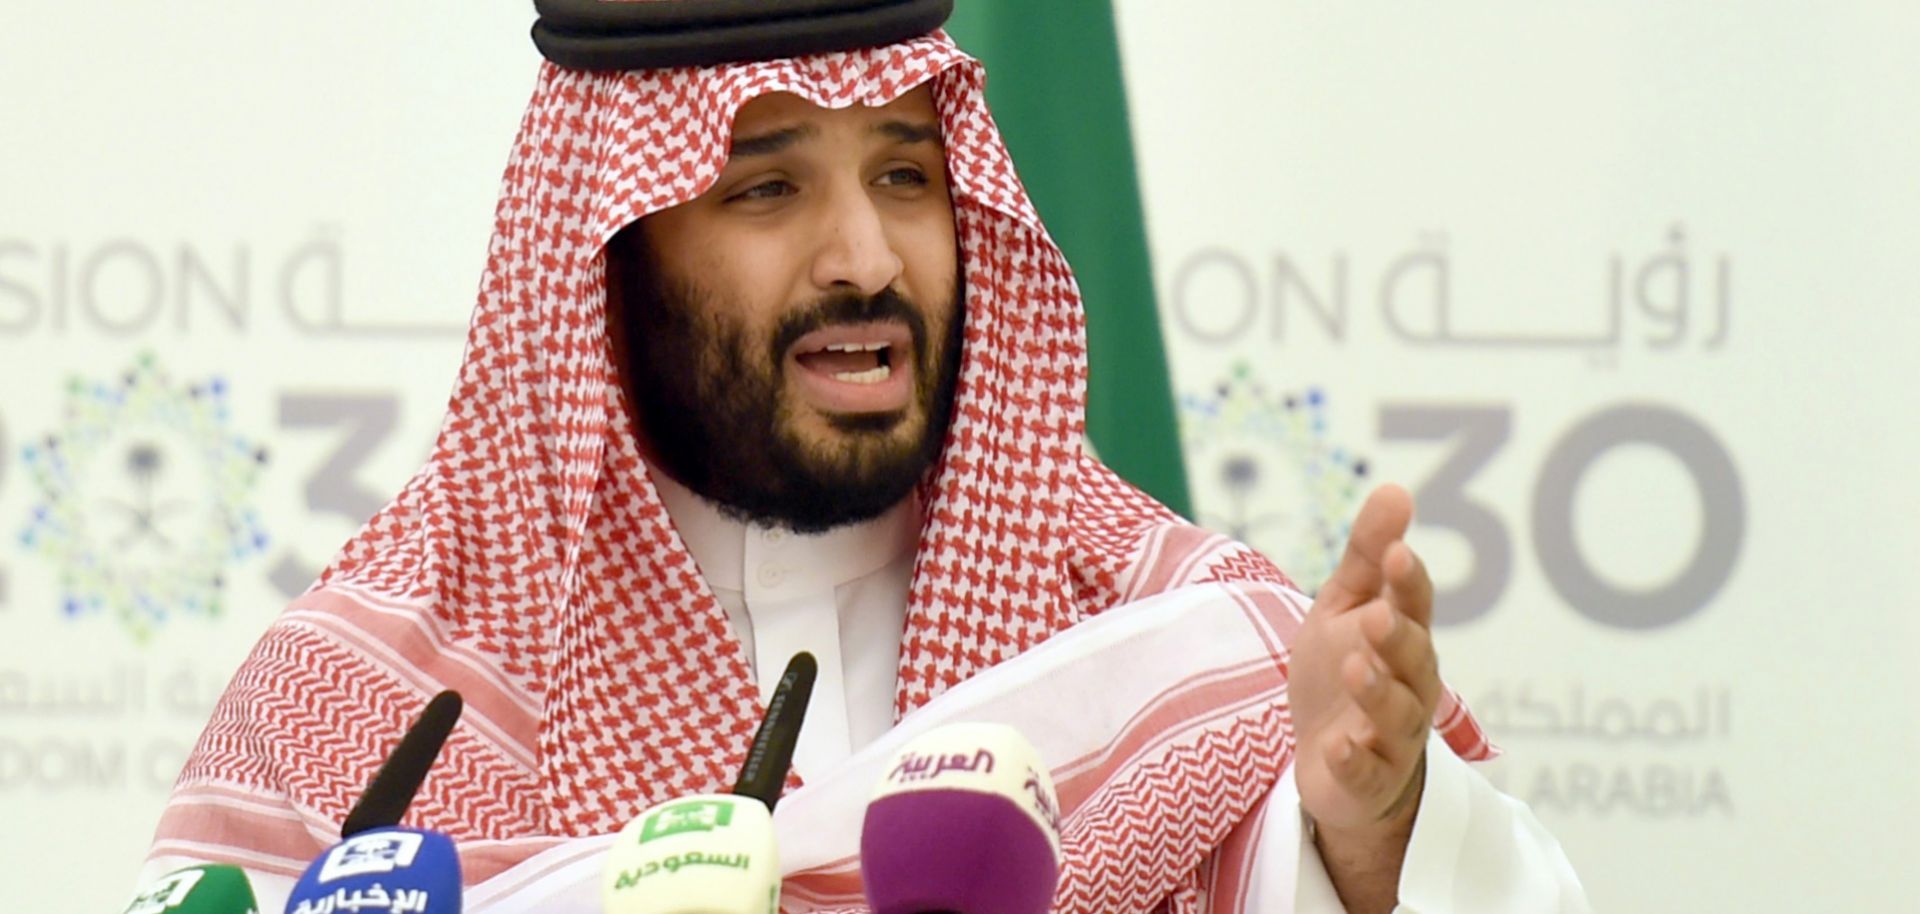 A Vision of Reform in Saudi Arabia